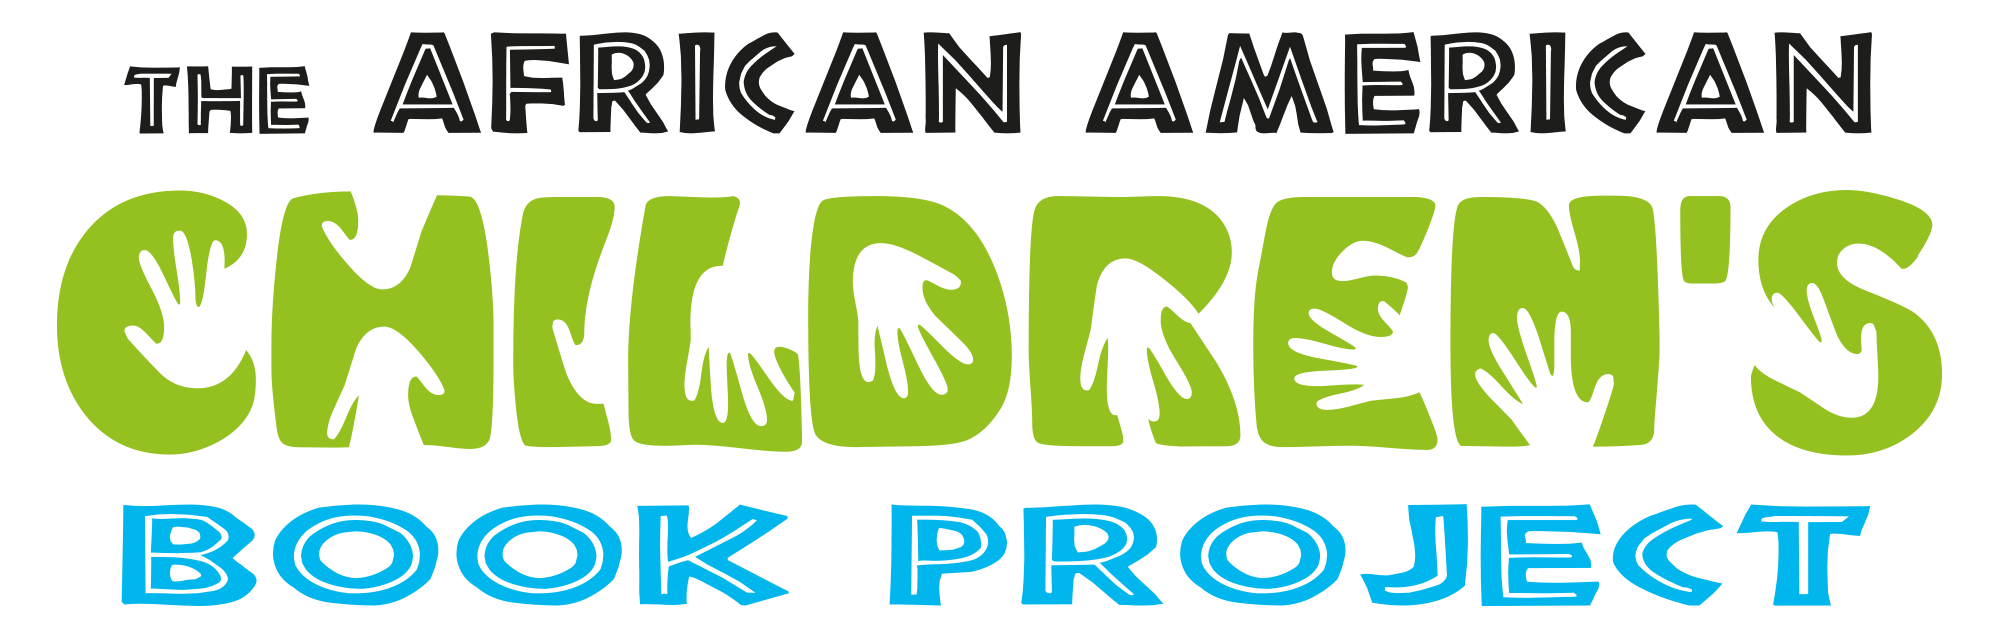 african american childrens book-logo